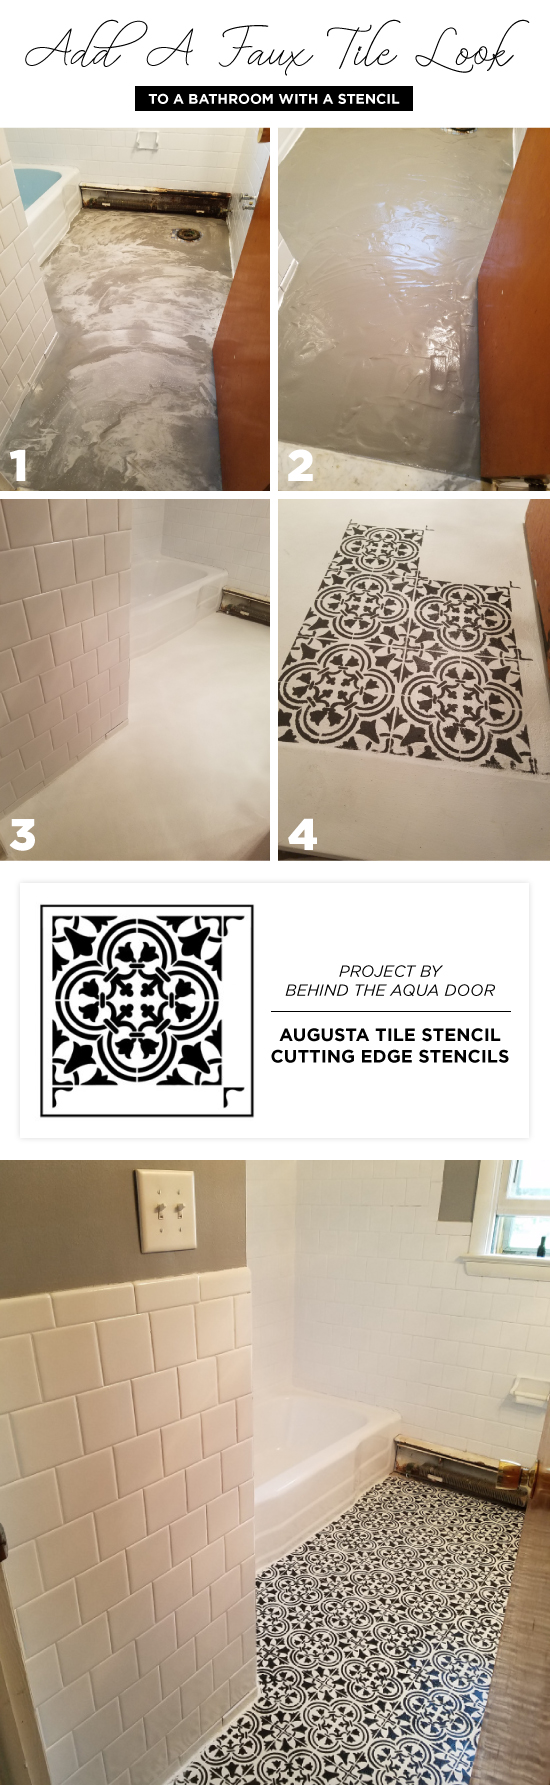 Cutting Edge Stencils shares a DIY stenciled cement bathroom floor makeover using the Augusta Tile Stencil from Cutting Edge Stencils. http://www.cuttingedgestencils.com/augusta-tile-stencil-design-patchwork-tiles-stencils.html